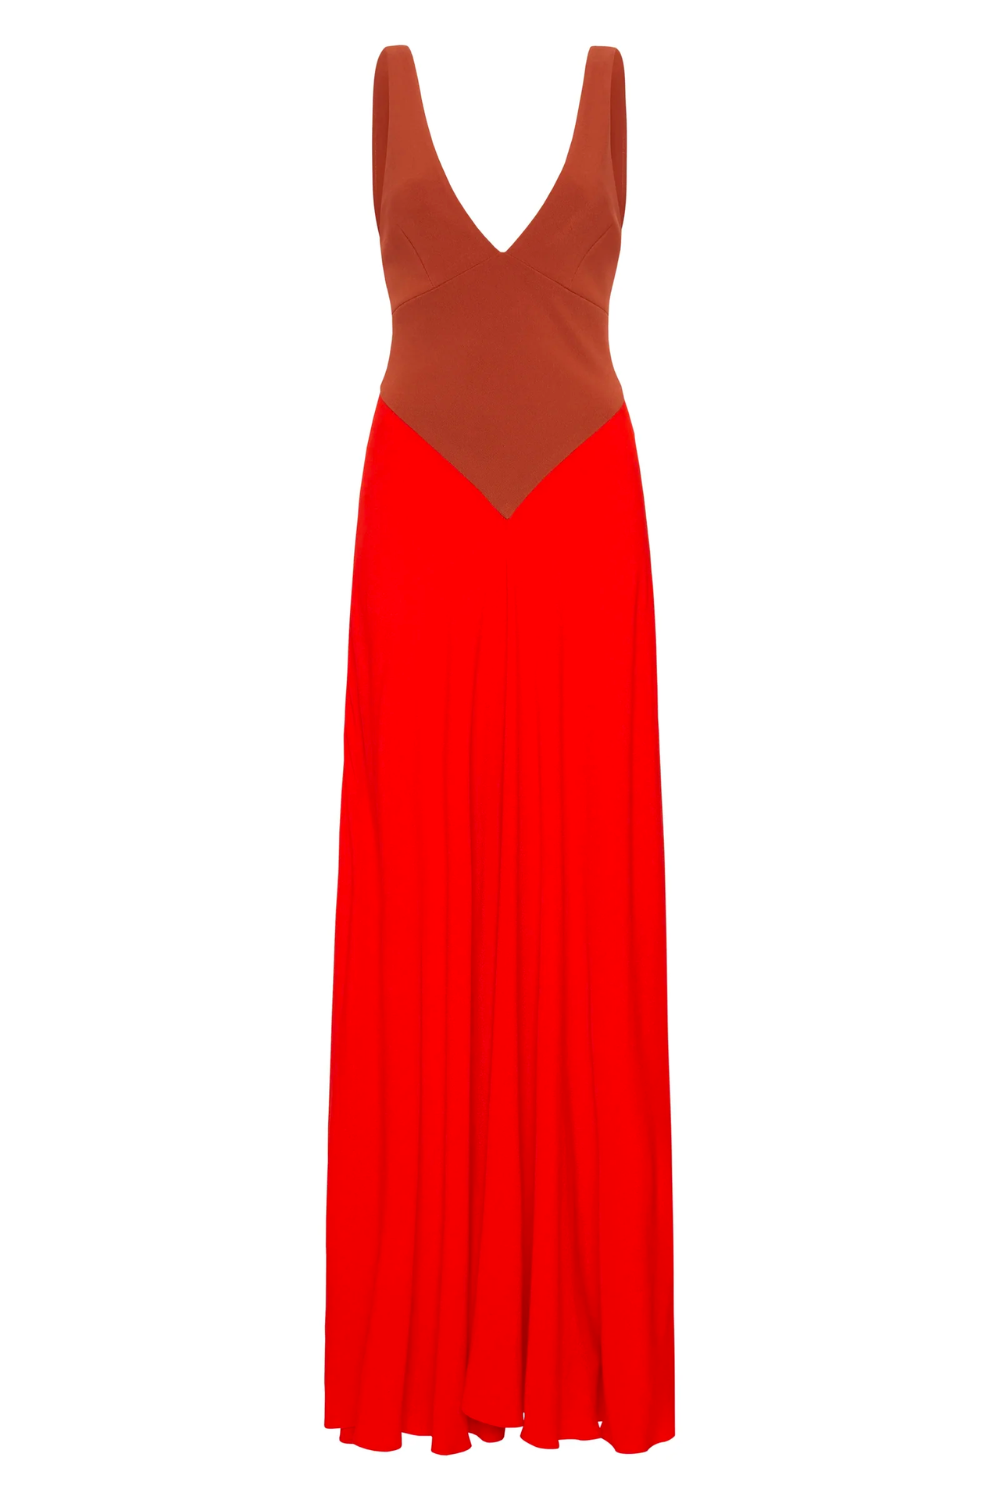 Em Rata & Dua Lipa Co-Sign On The Red Maxi Dress Trend